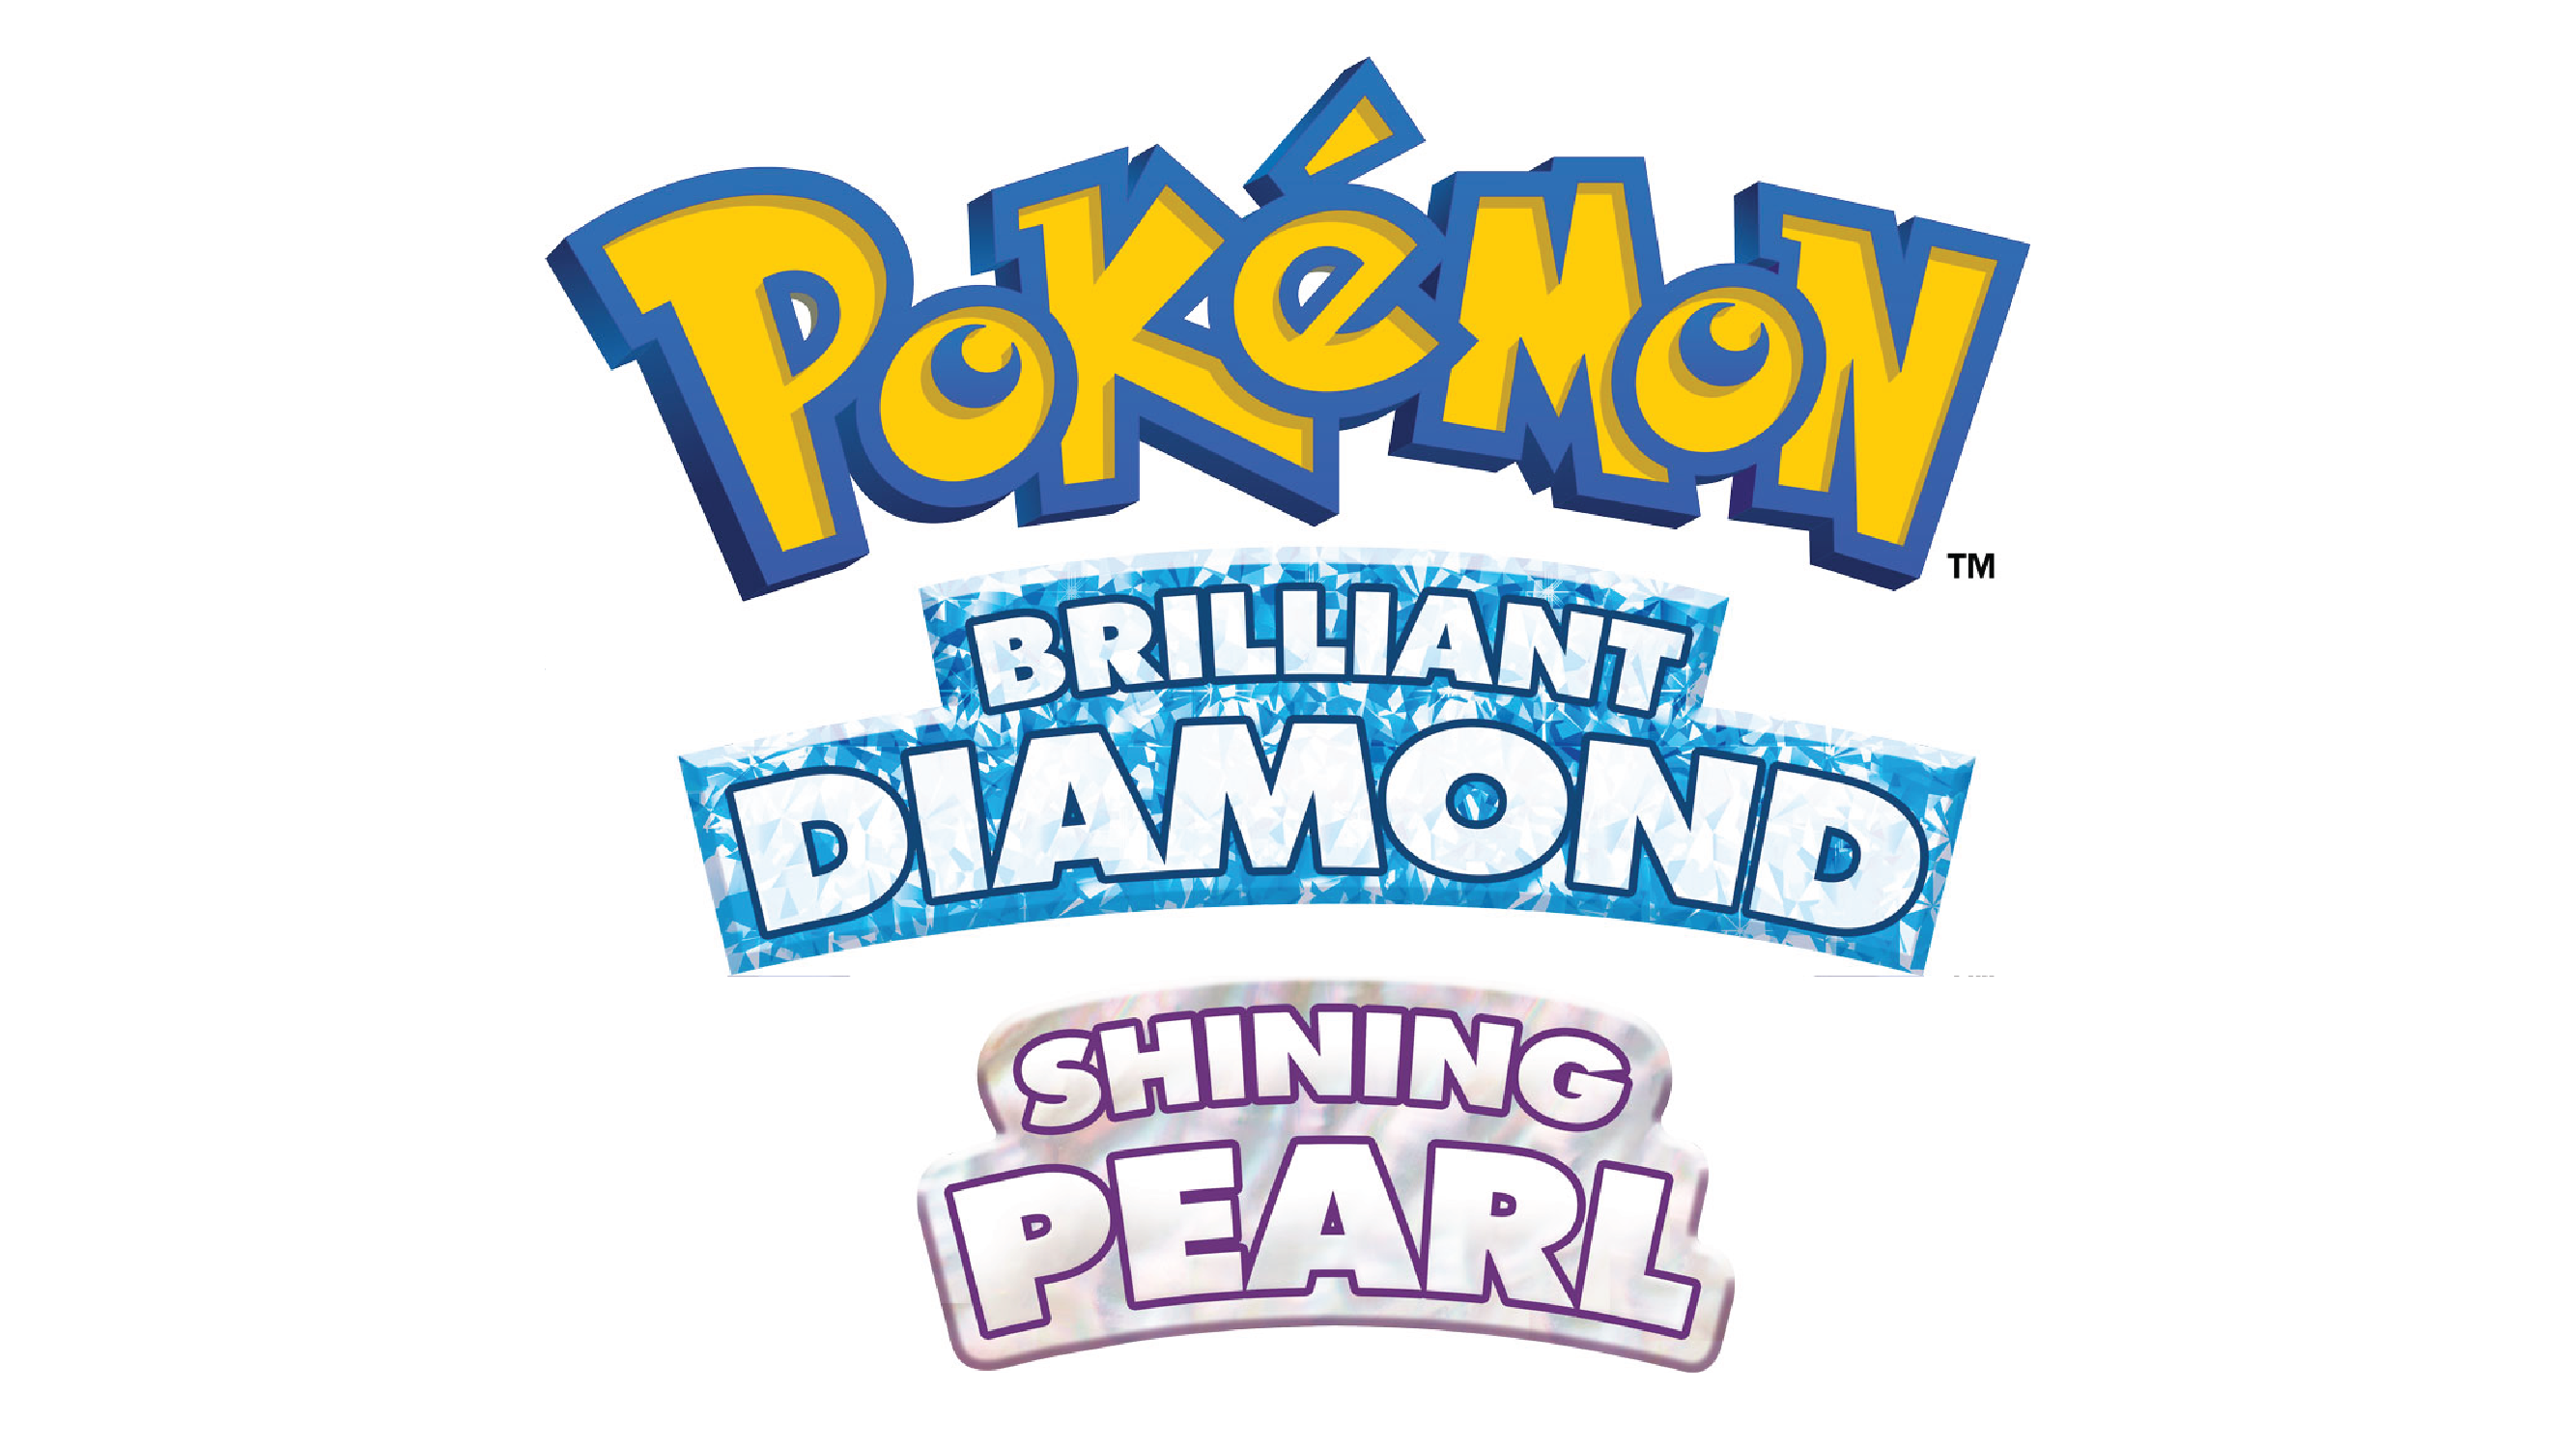 pokemon shining pearl